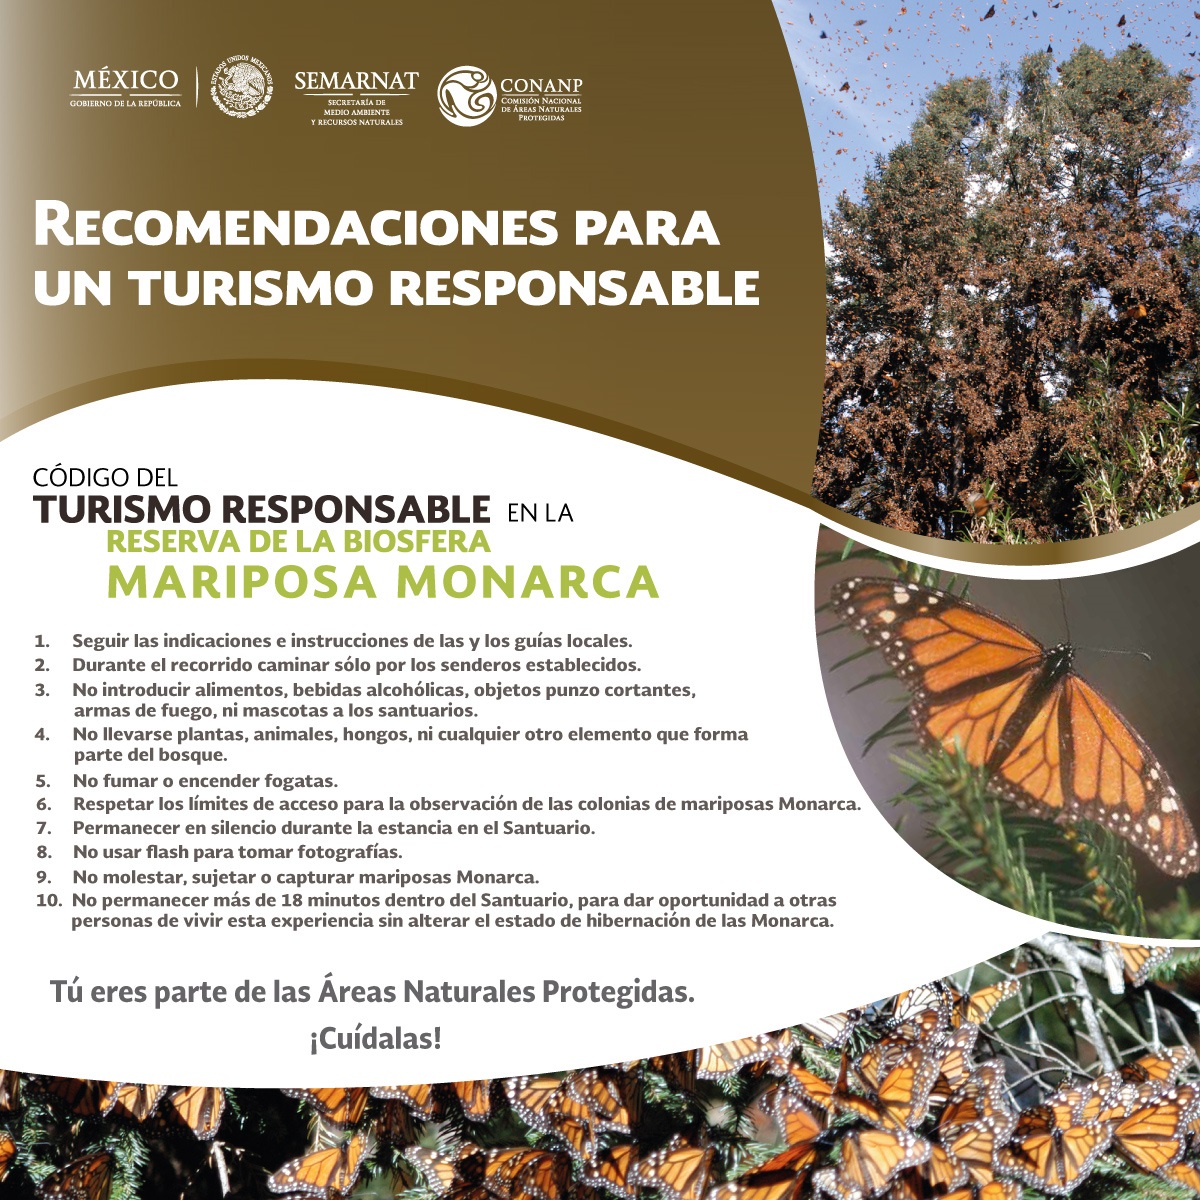 /cms/uploads/image/file/236954/recomendaciones_turismo_RB_Mariposa_Monarca_1200x1200_2016.jpg